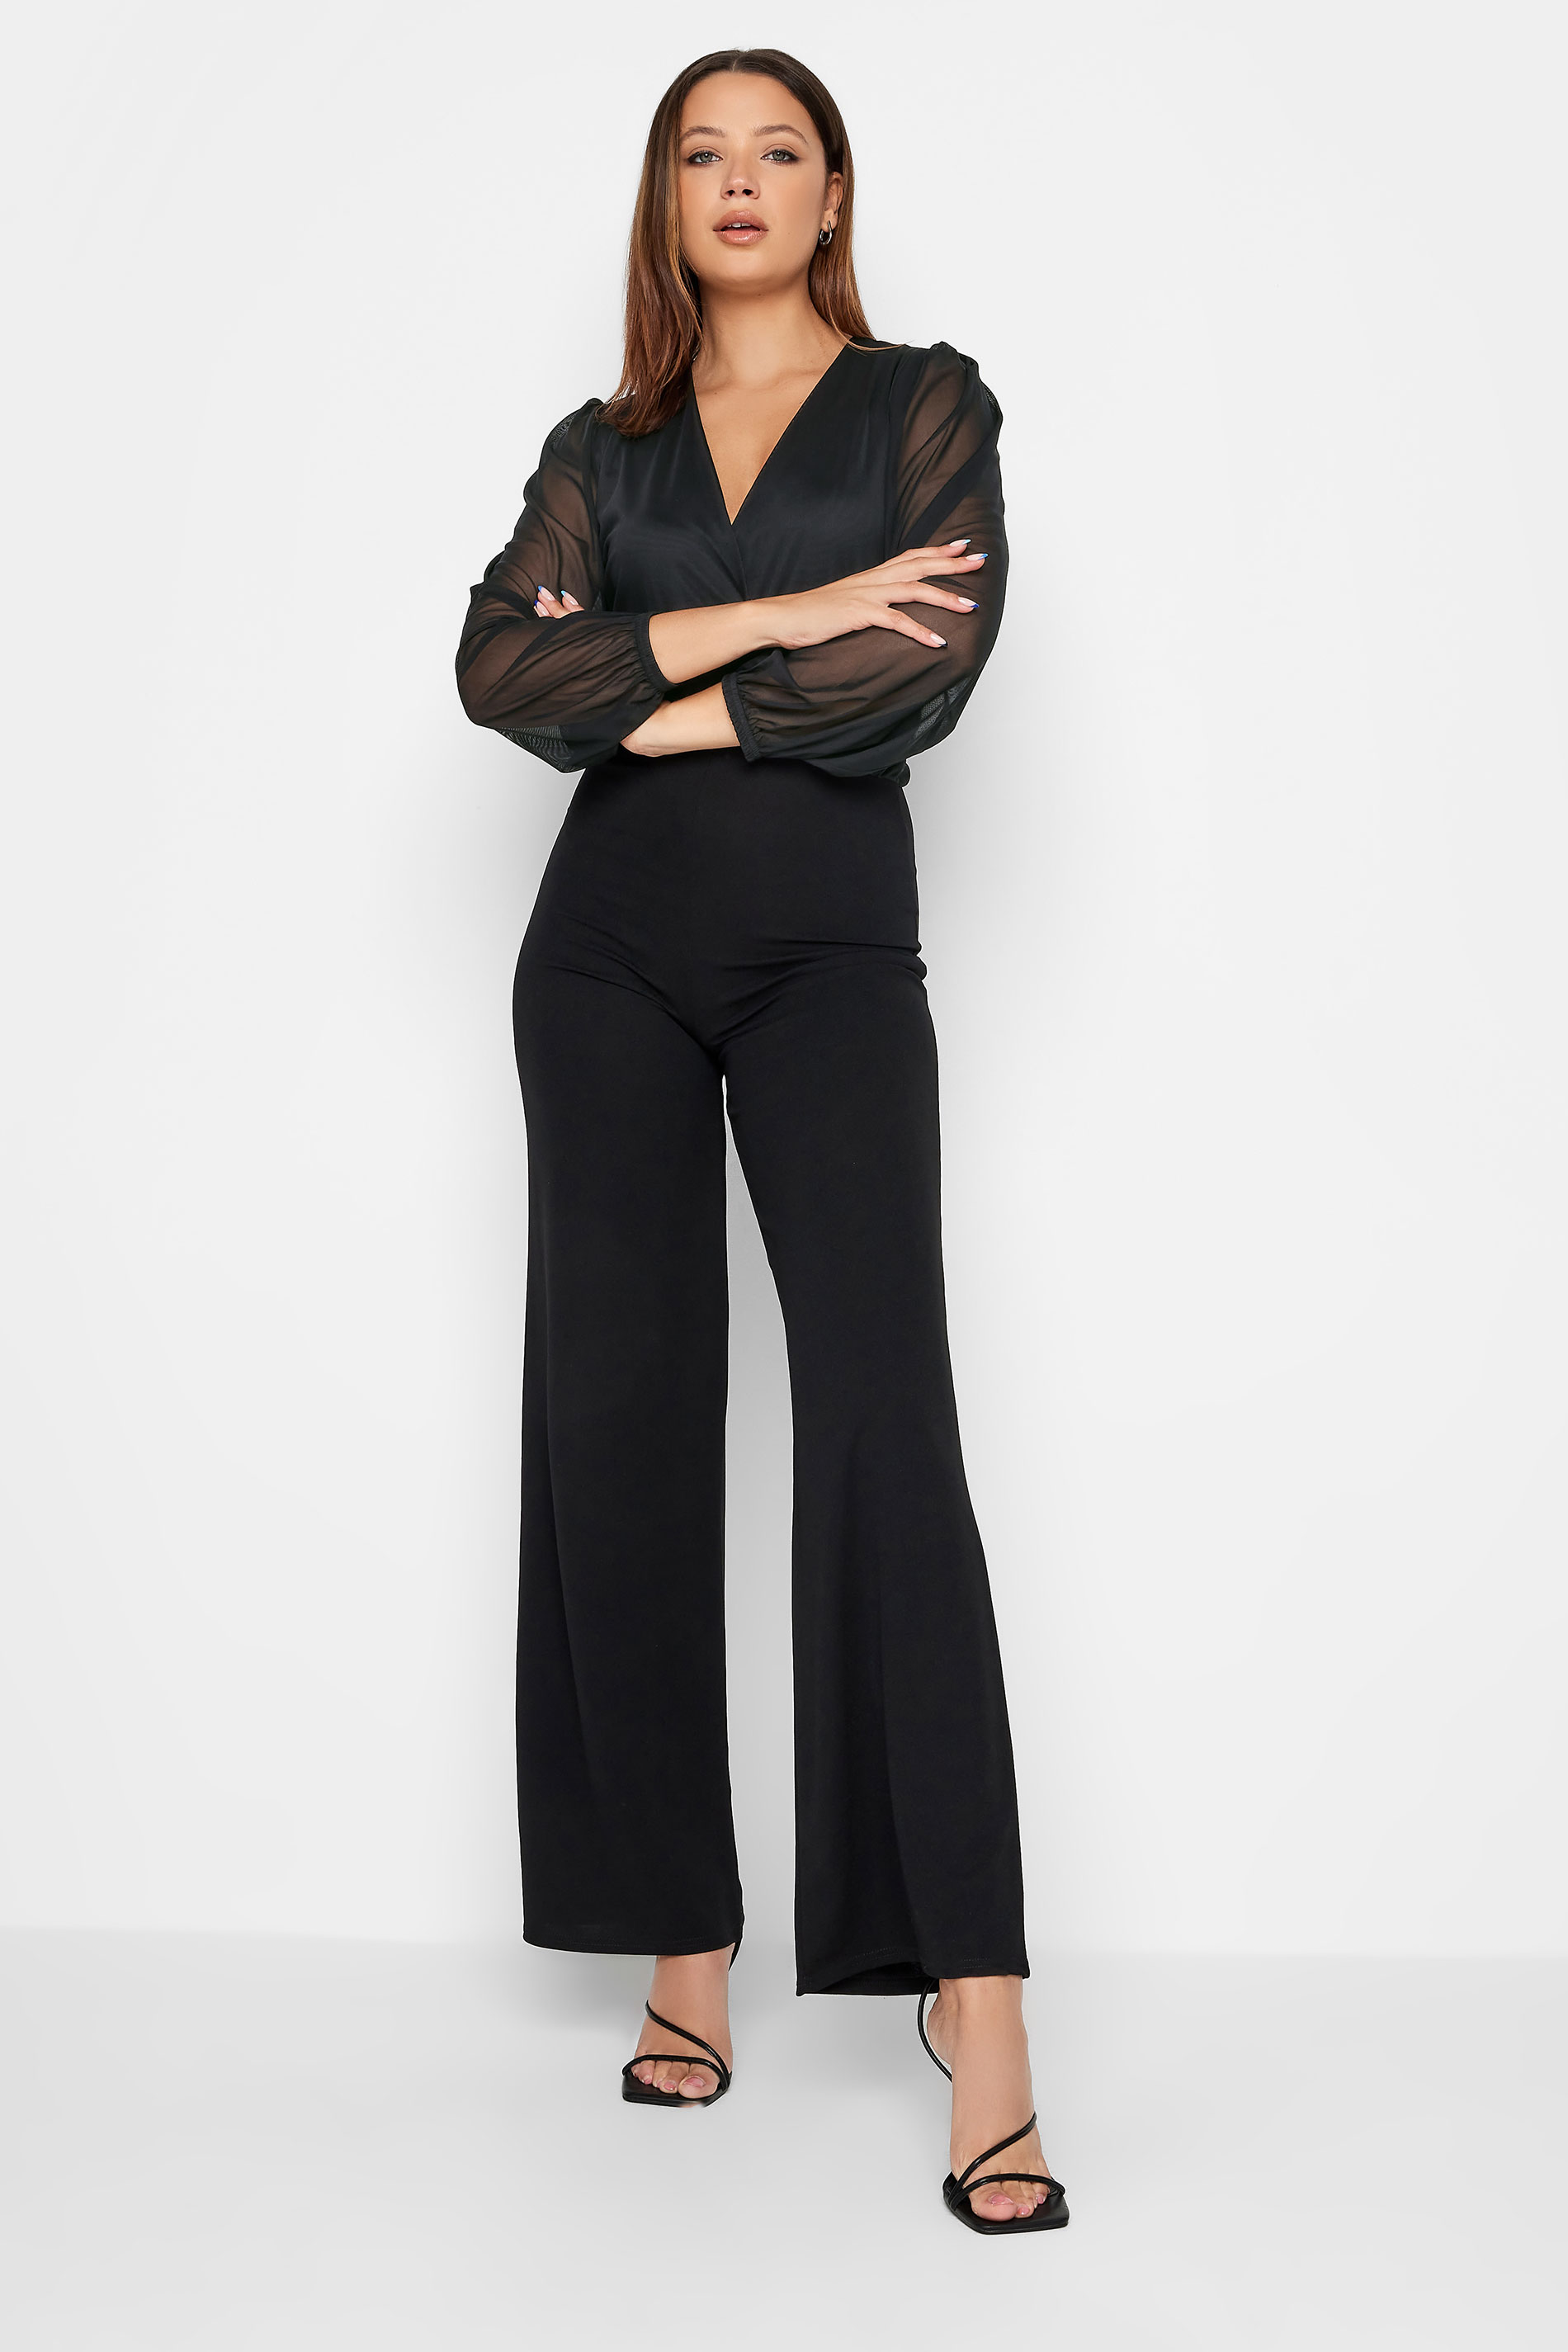 LTS Tall Black Wrap Mesh Sleeve Jumpsuit | Long Tall Sally  2